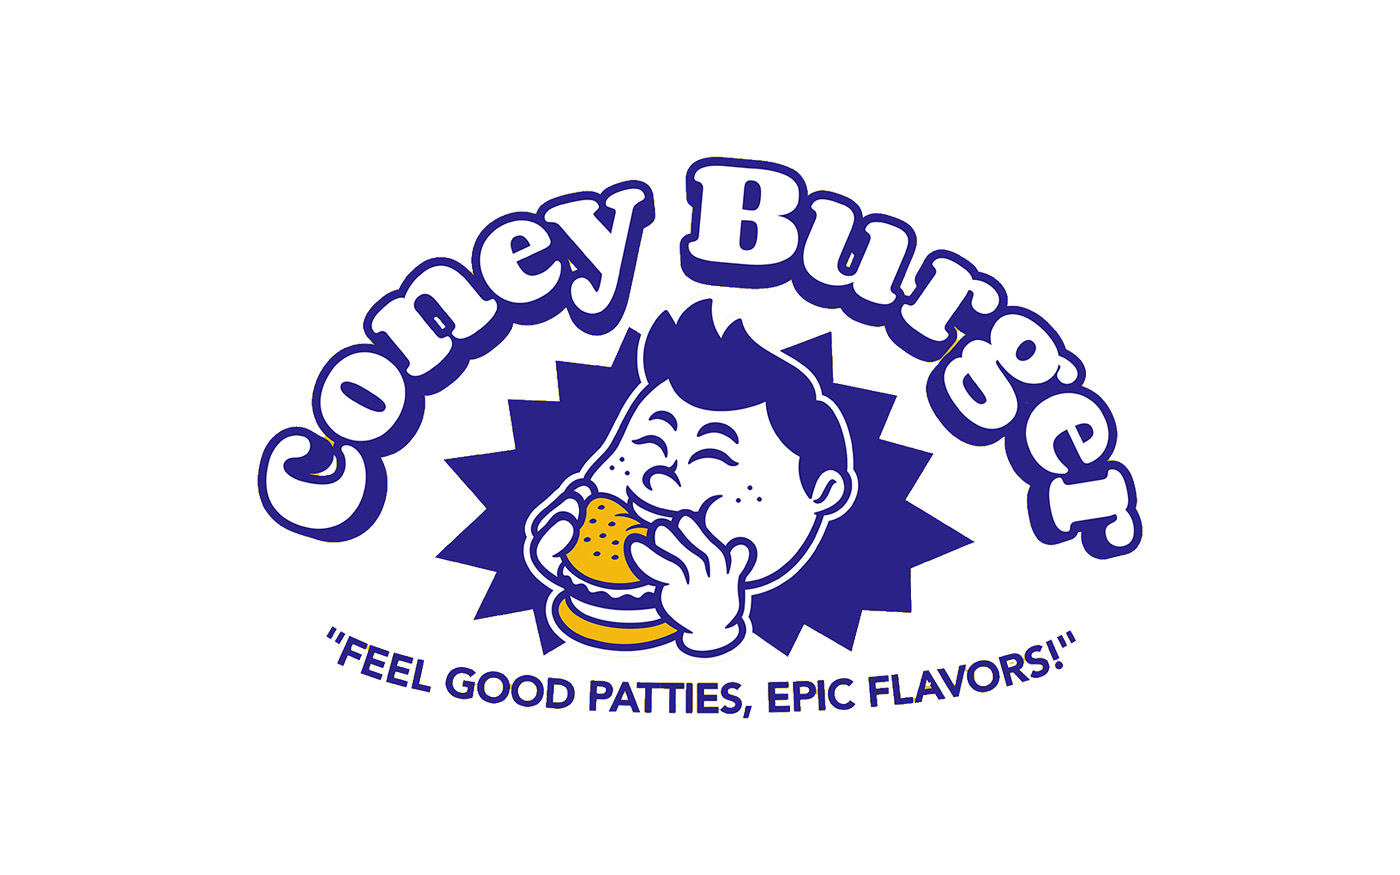 Coney Burger